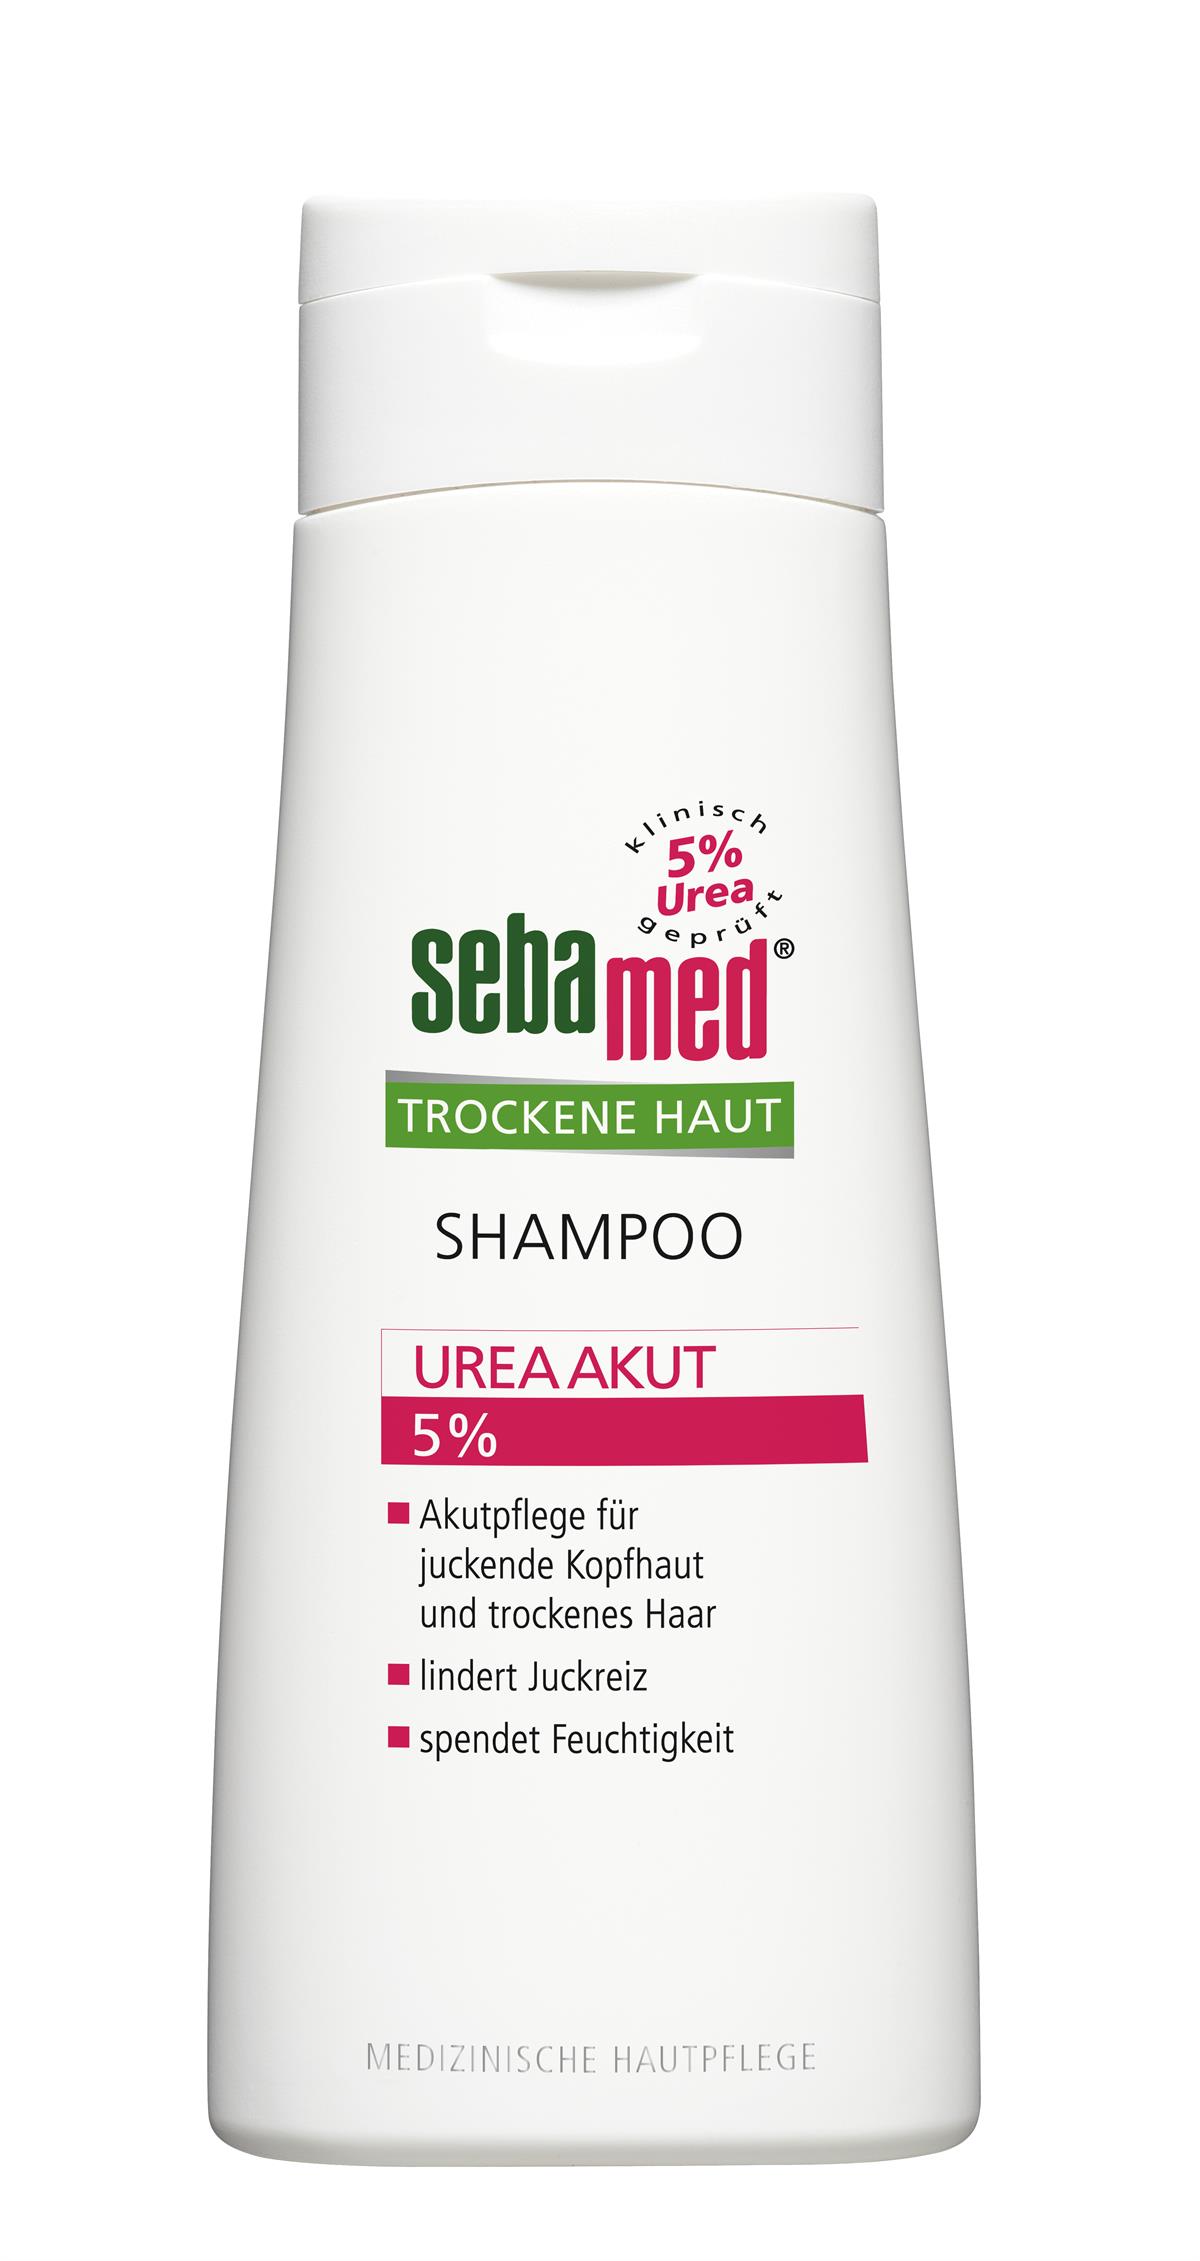 sebamed Trockene Haut Shampoo Urea Akut 5% 200 ml, UVP: 5,56 €